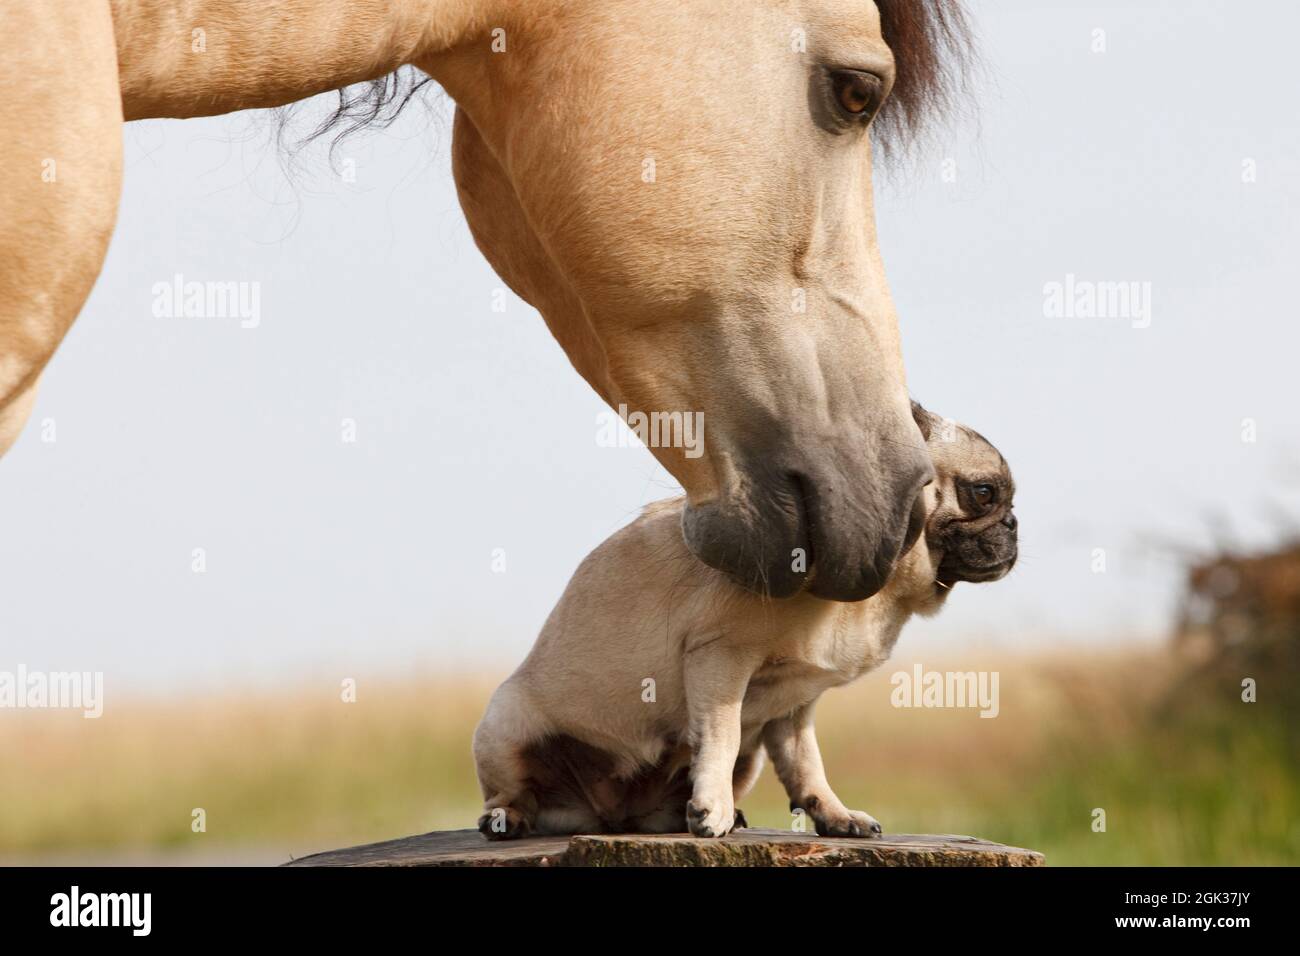 Connemara horse and a pug dog. Germany Stock Photo